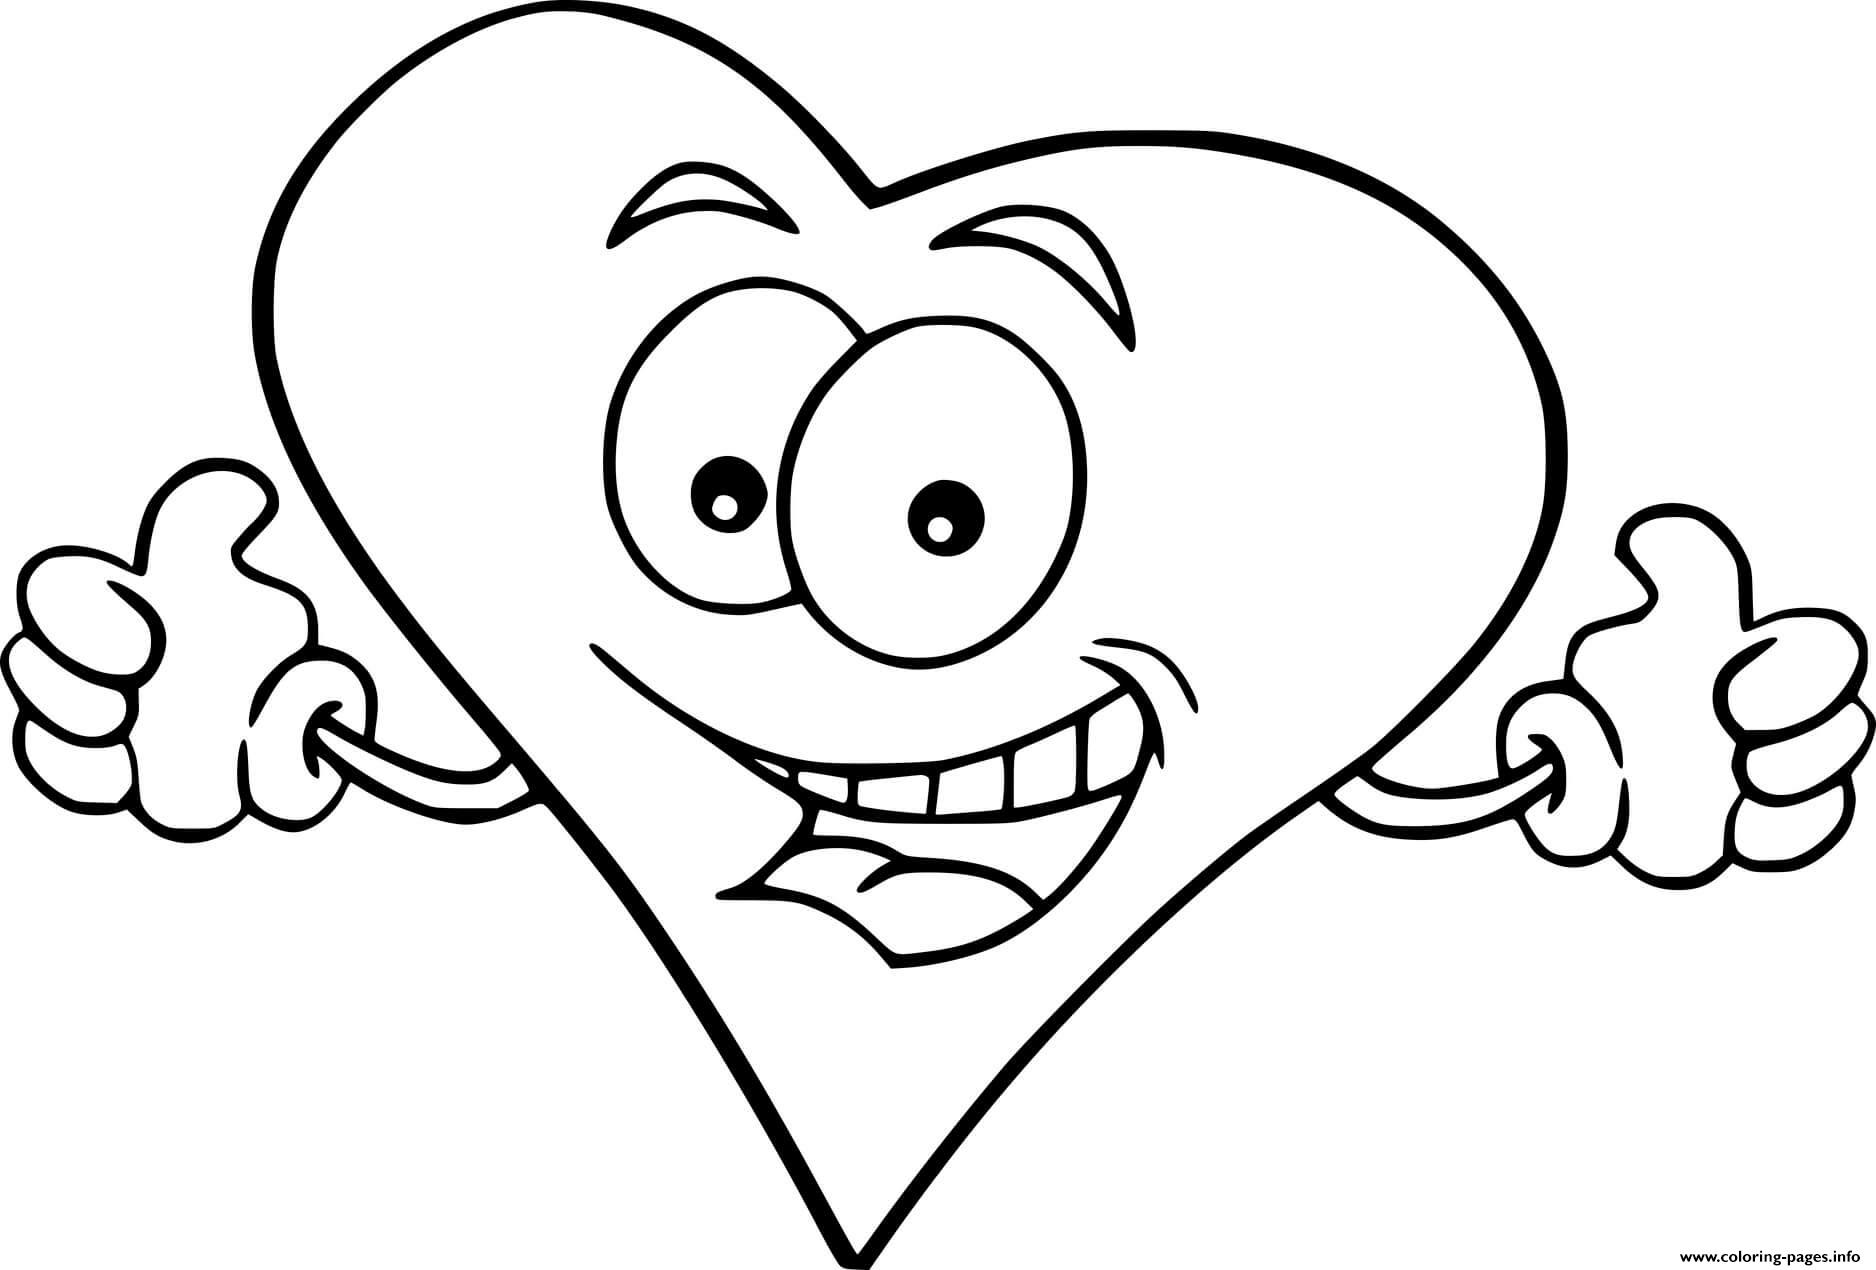 Cartoon Heart coloring